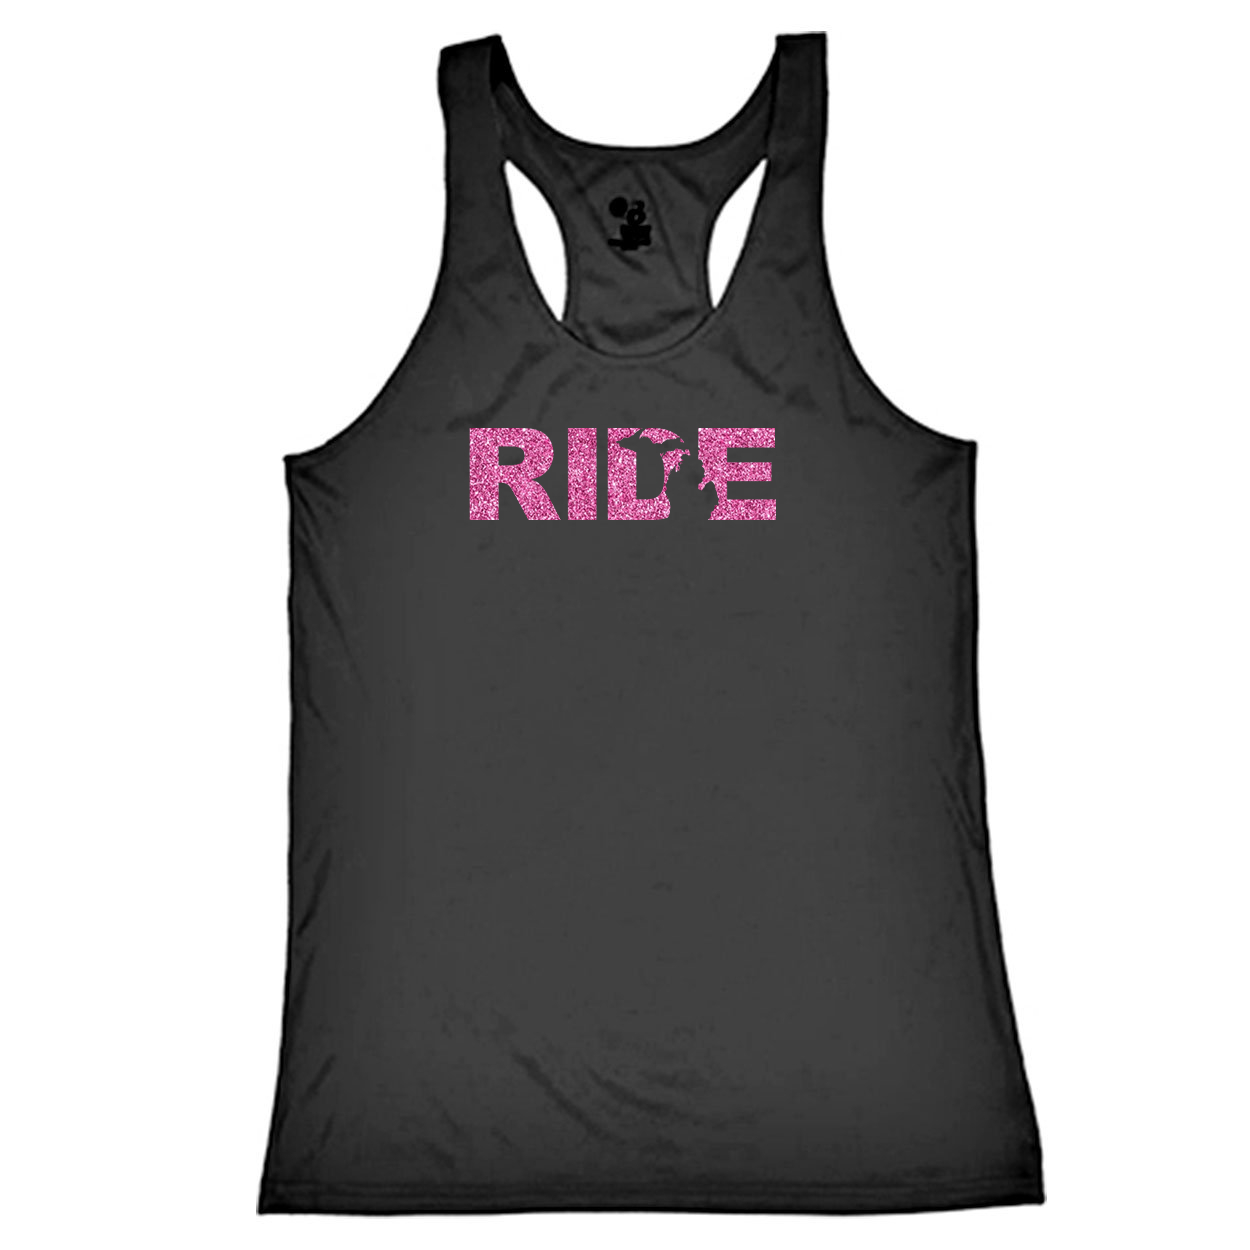 Ride Michigan Classic Youth Girls Performance Racerback Tank Top Black (Glitter Pink Logo)